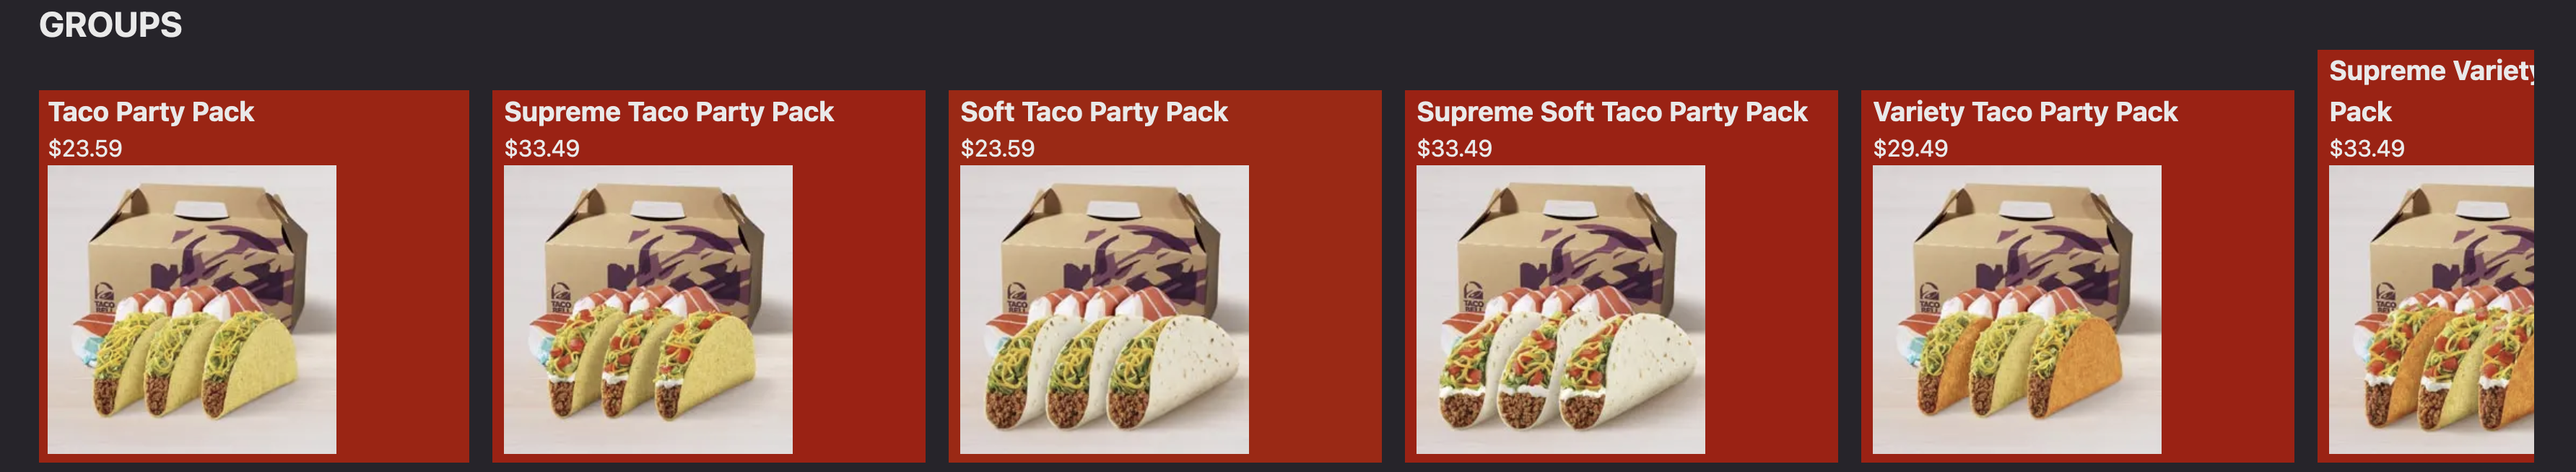 Berkeley Taco Bell prices